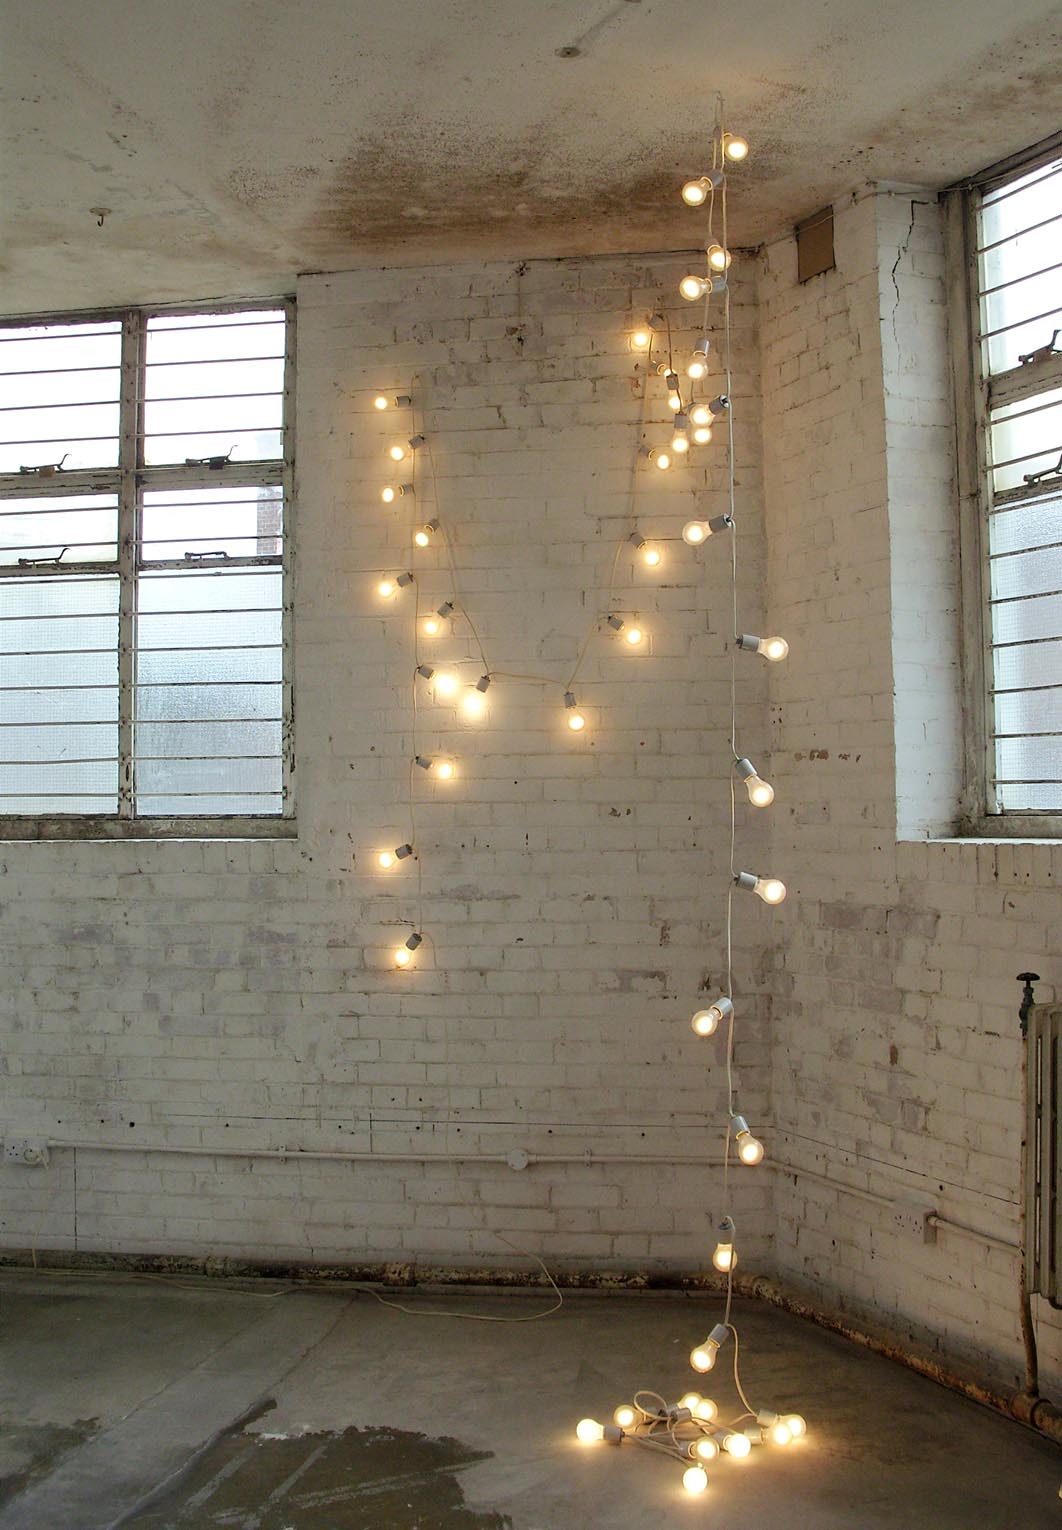      Felix Gonzalez-Torres   "Untitled" (America) #2   1992   42 Light Bulbs, Extension Cords, Porcelain Light Sockets:&nbsp;  Installation Variable  